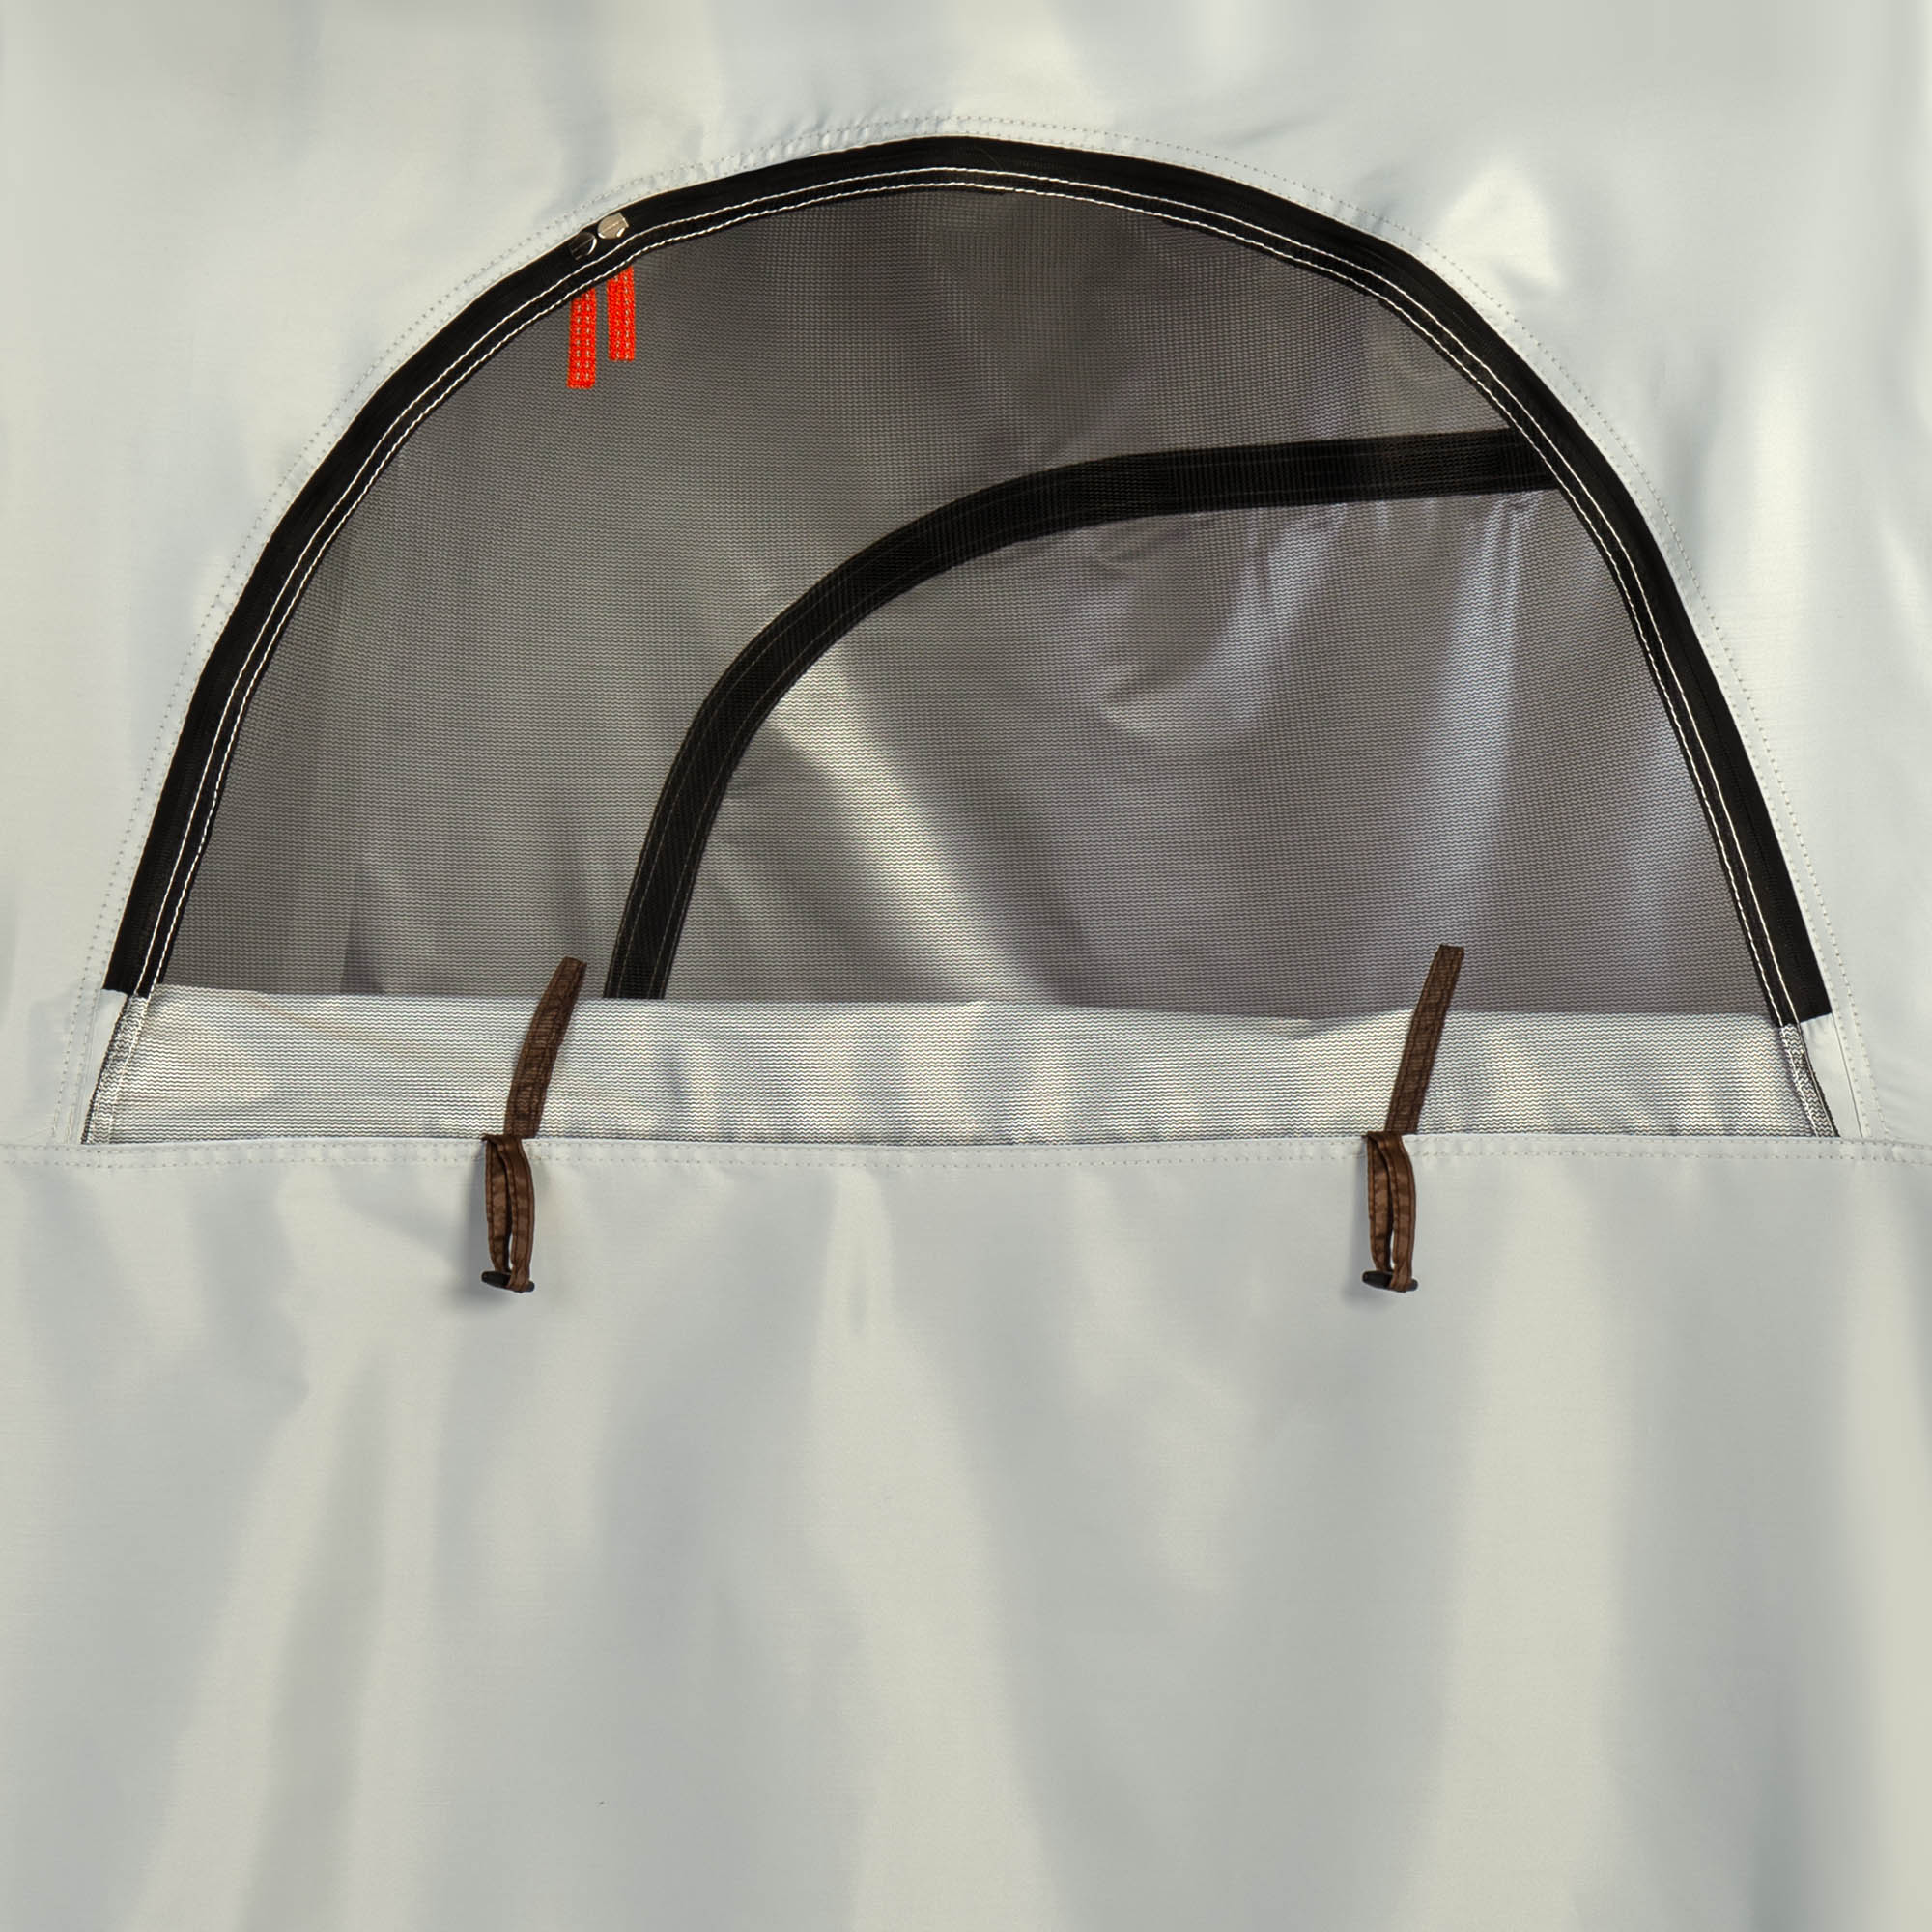 Палатка Condor, ART-1901, душ-туалет, размер 160 x 160 x h230, вес 4,8 кг